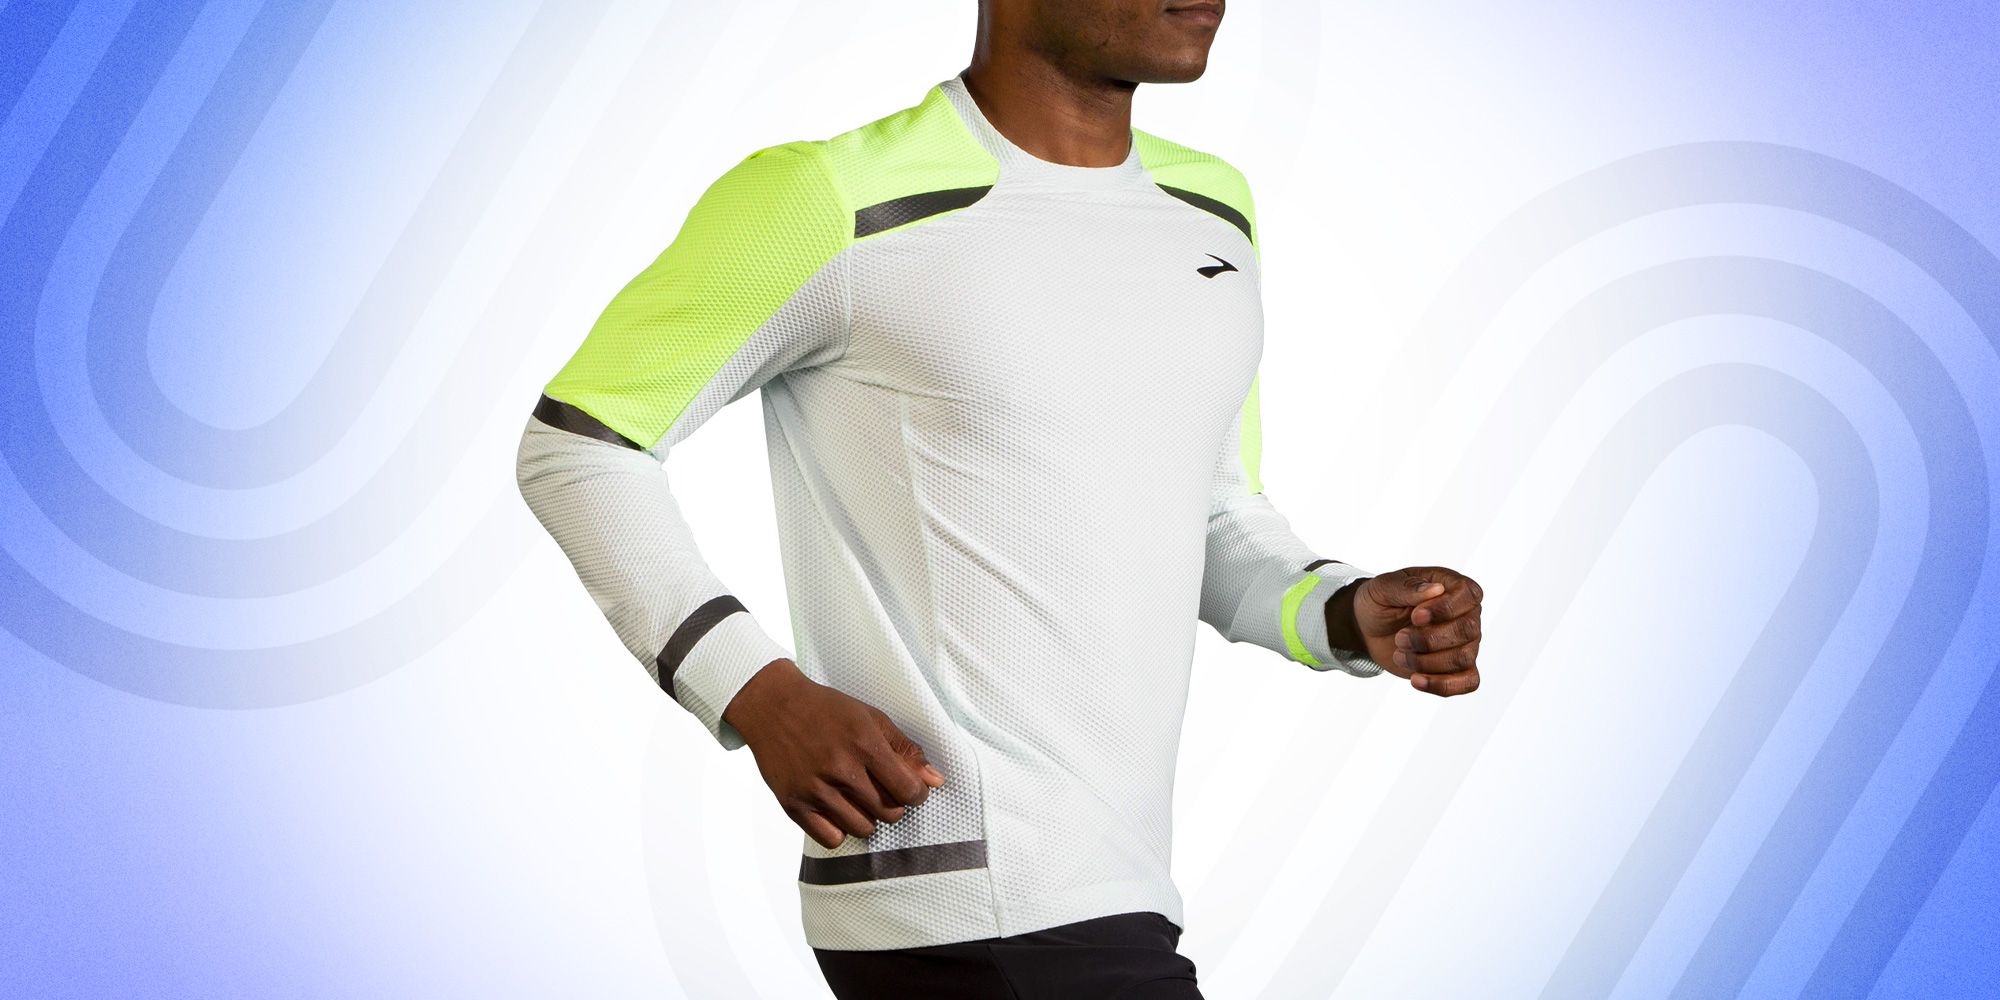 Ogeenier Mens Long Short Sleeve Workout Shirts Quick-Dry Running Shirt Athletic Shirts Training Gym T-Shirt Sports Shirts Tops 